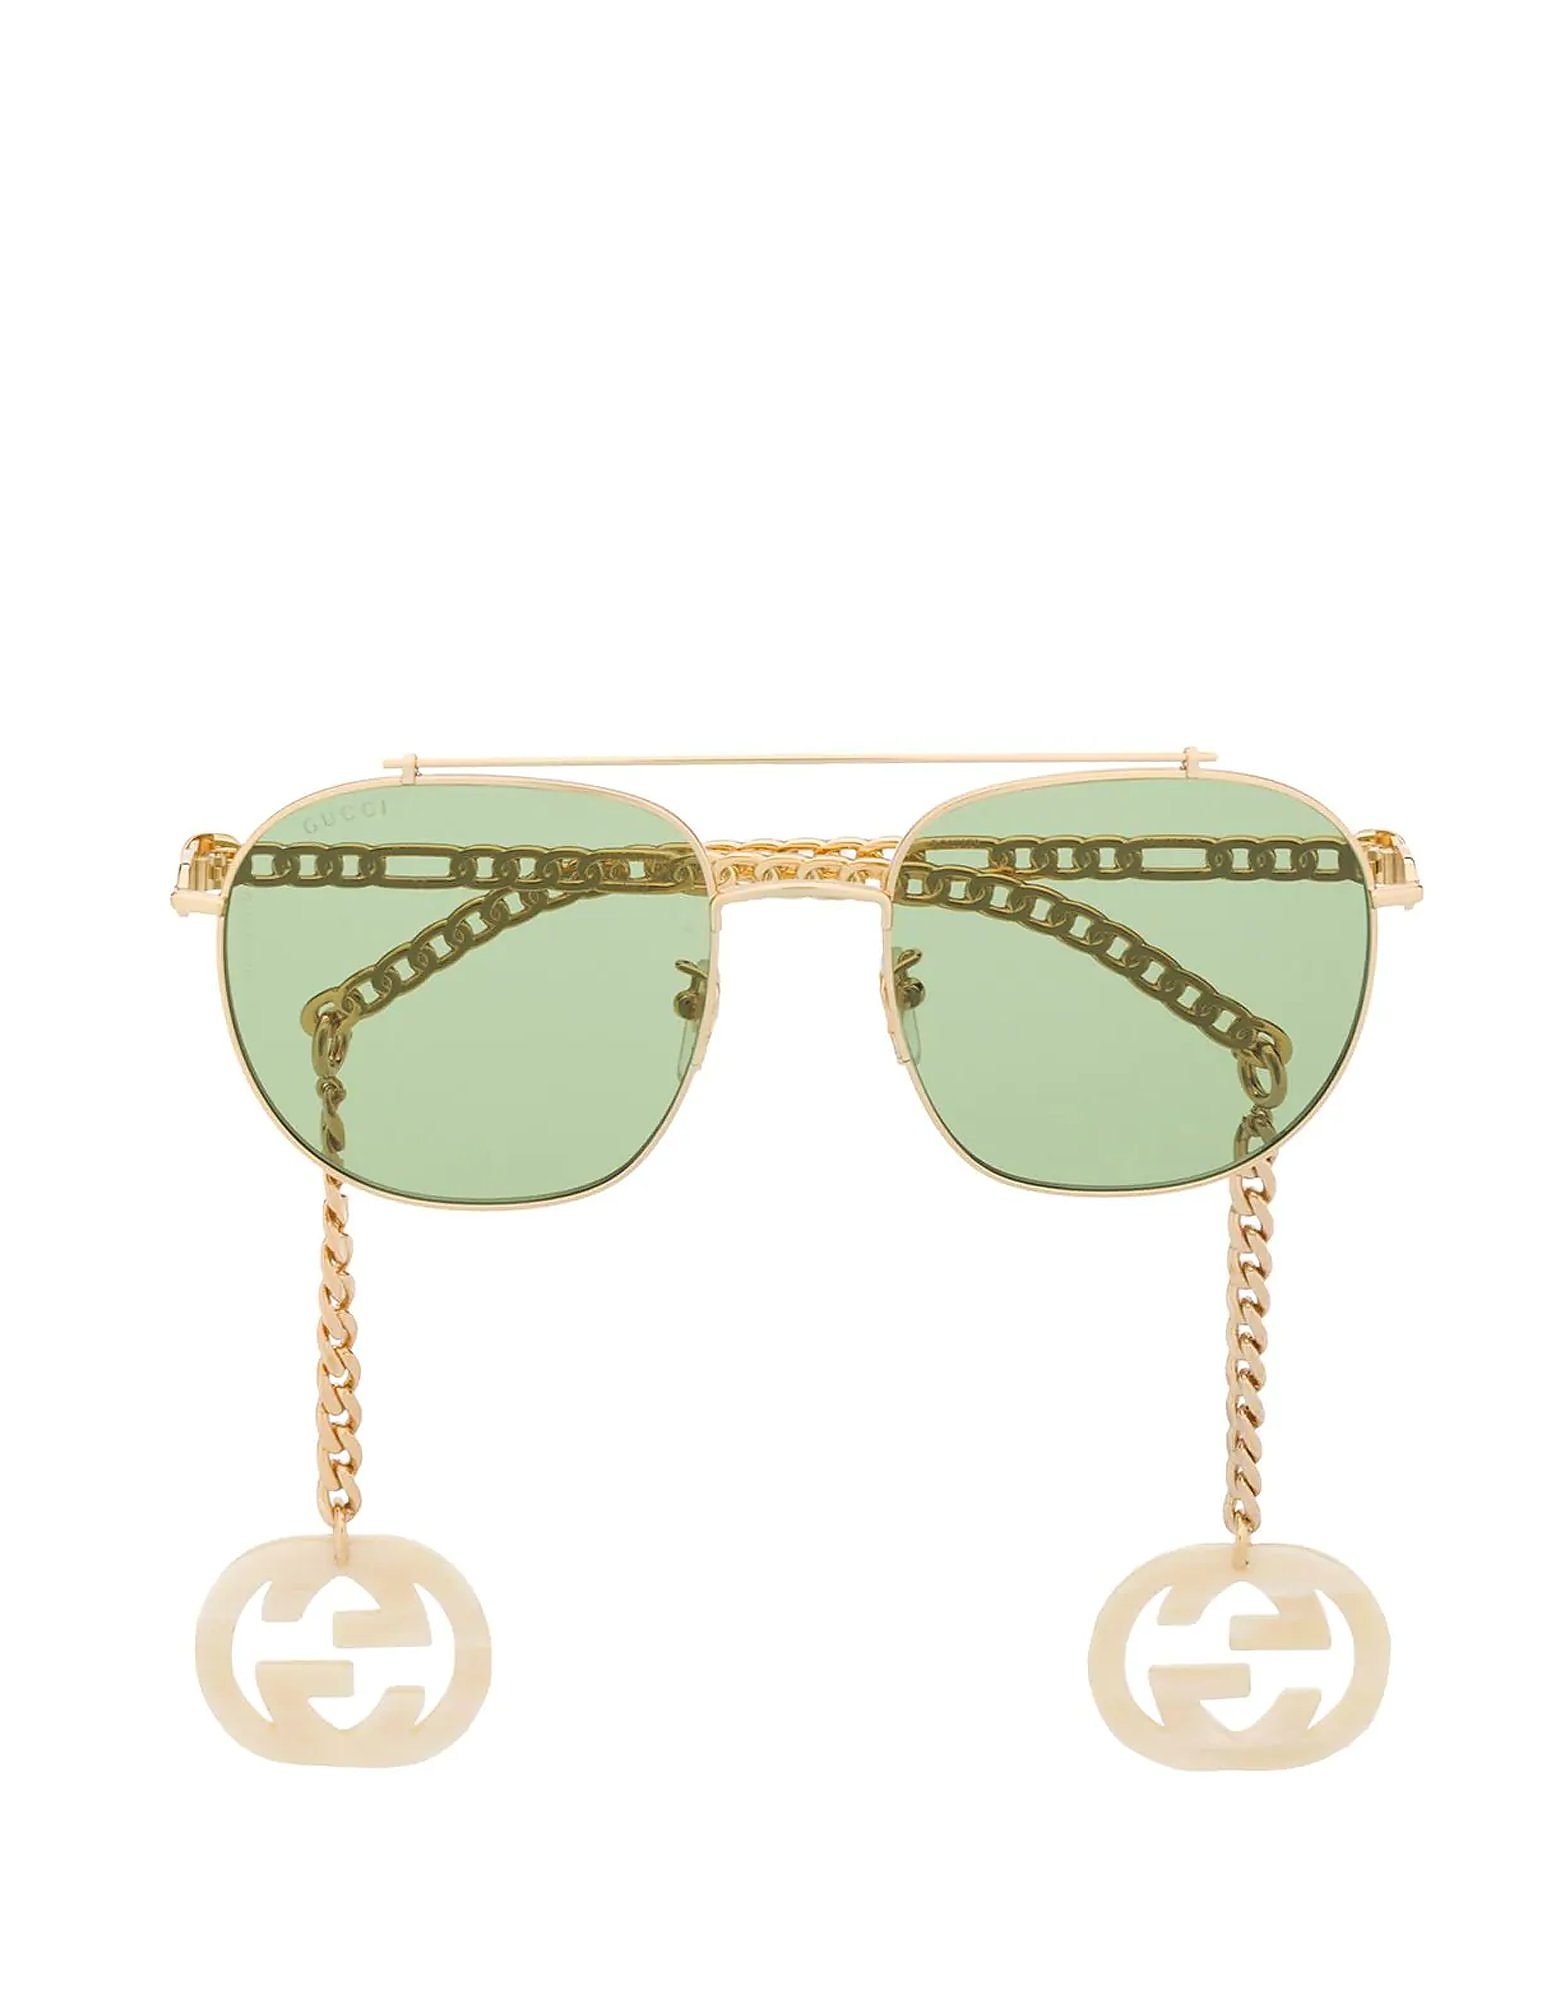 Gucci Sunglasses Metal Square-Frame Men's Sunglasses w/Charm